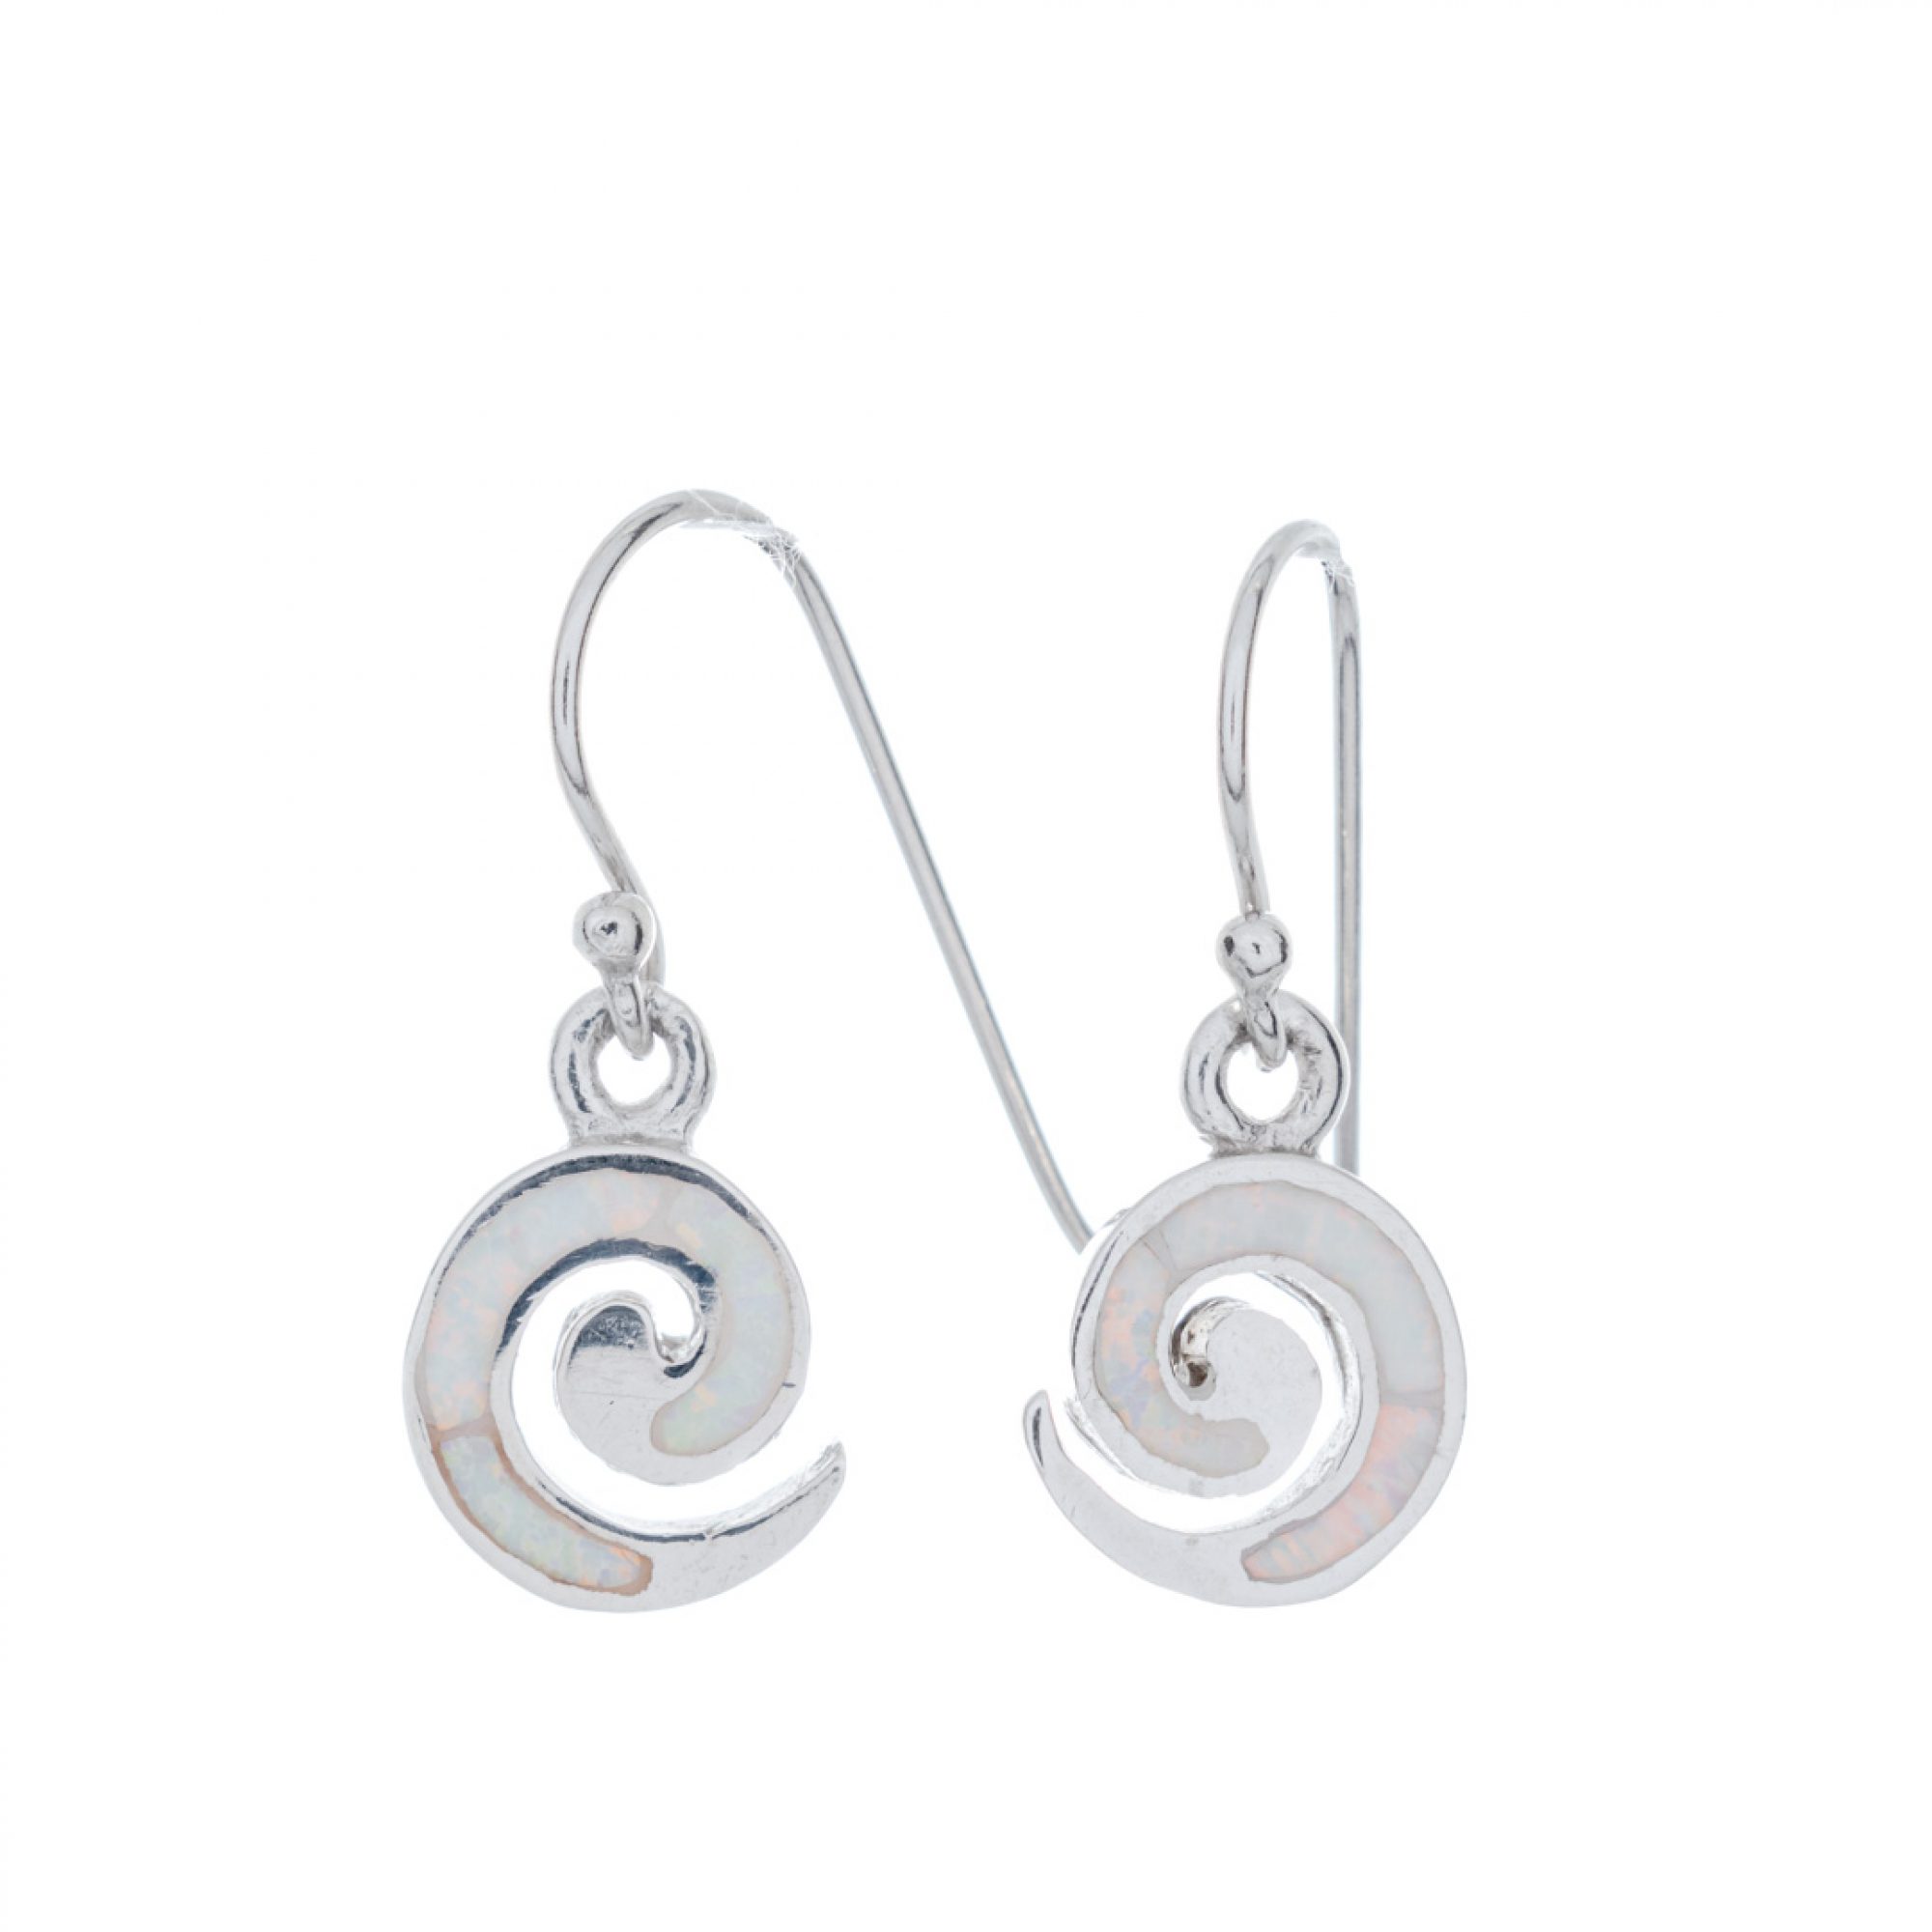 Dangle earrings with white opal